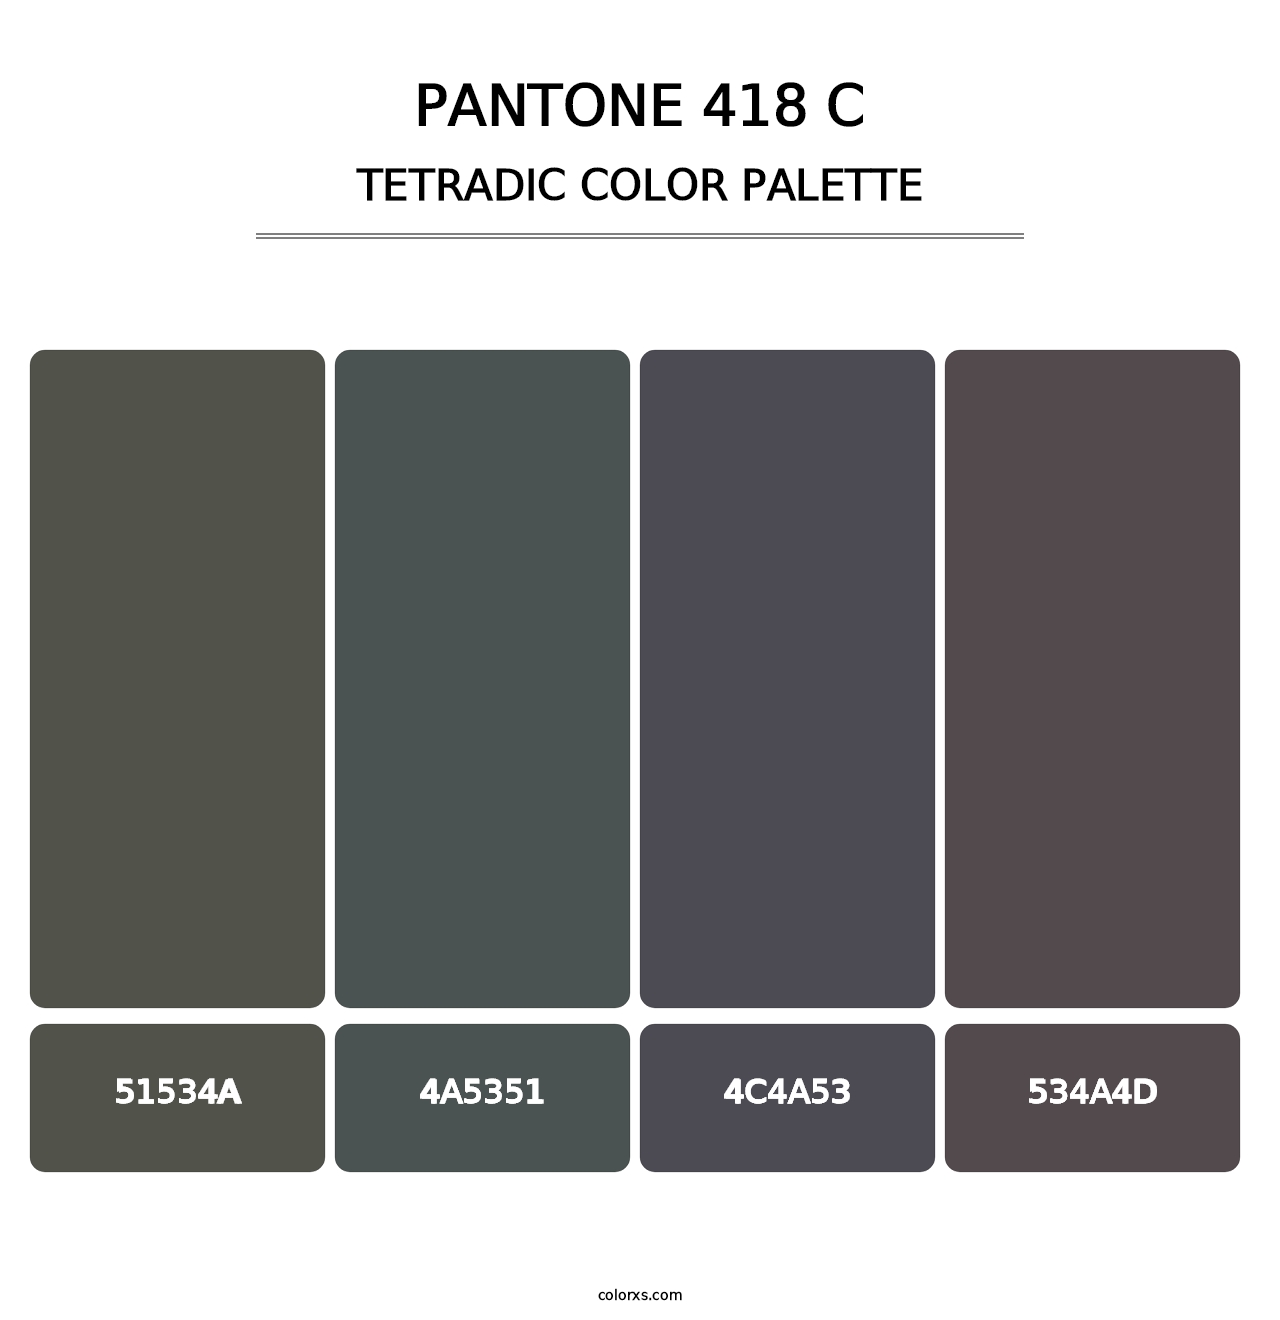 PANTONE 418 C - Tetradic Color Palette